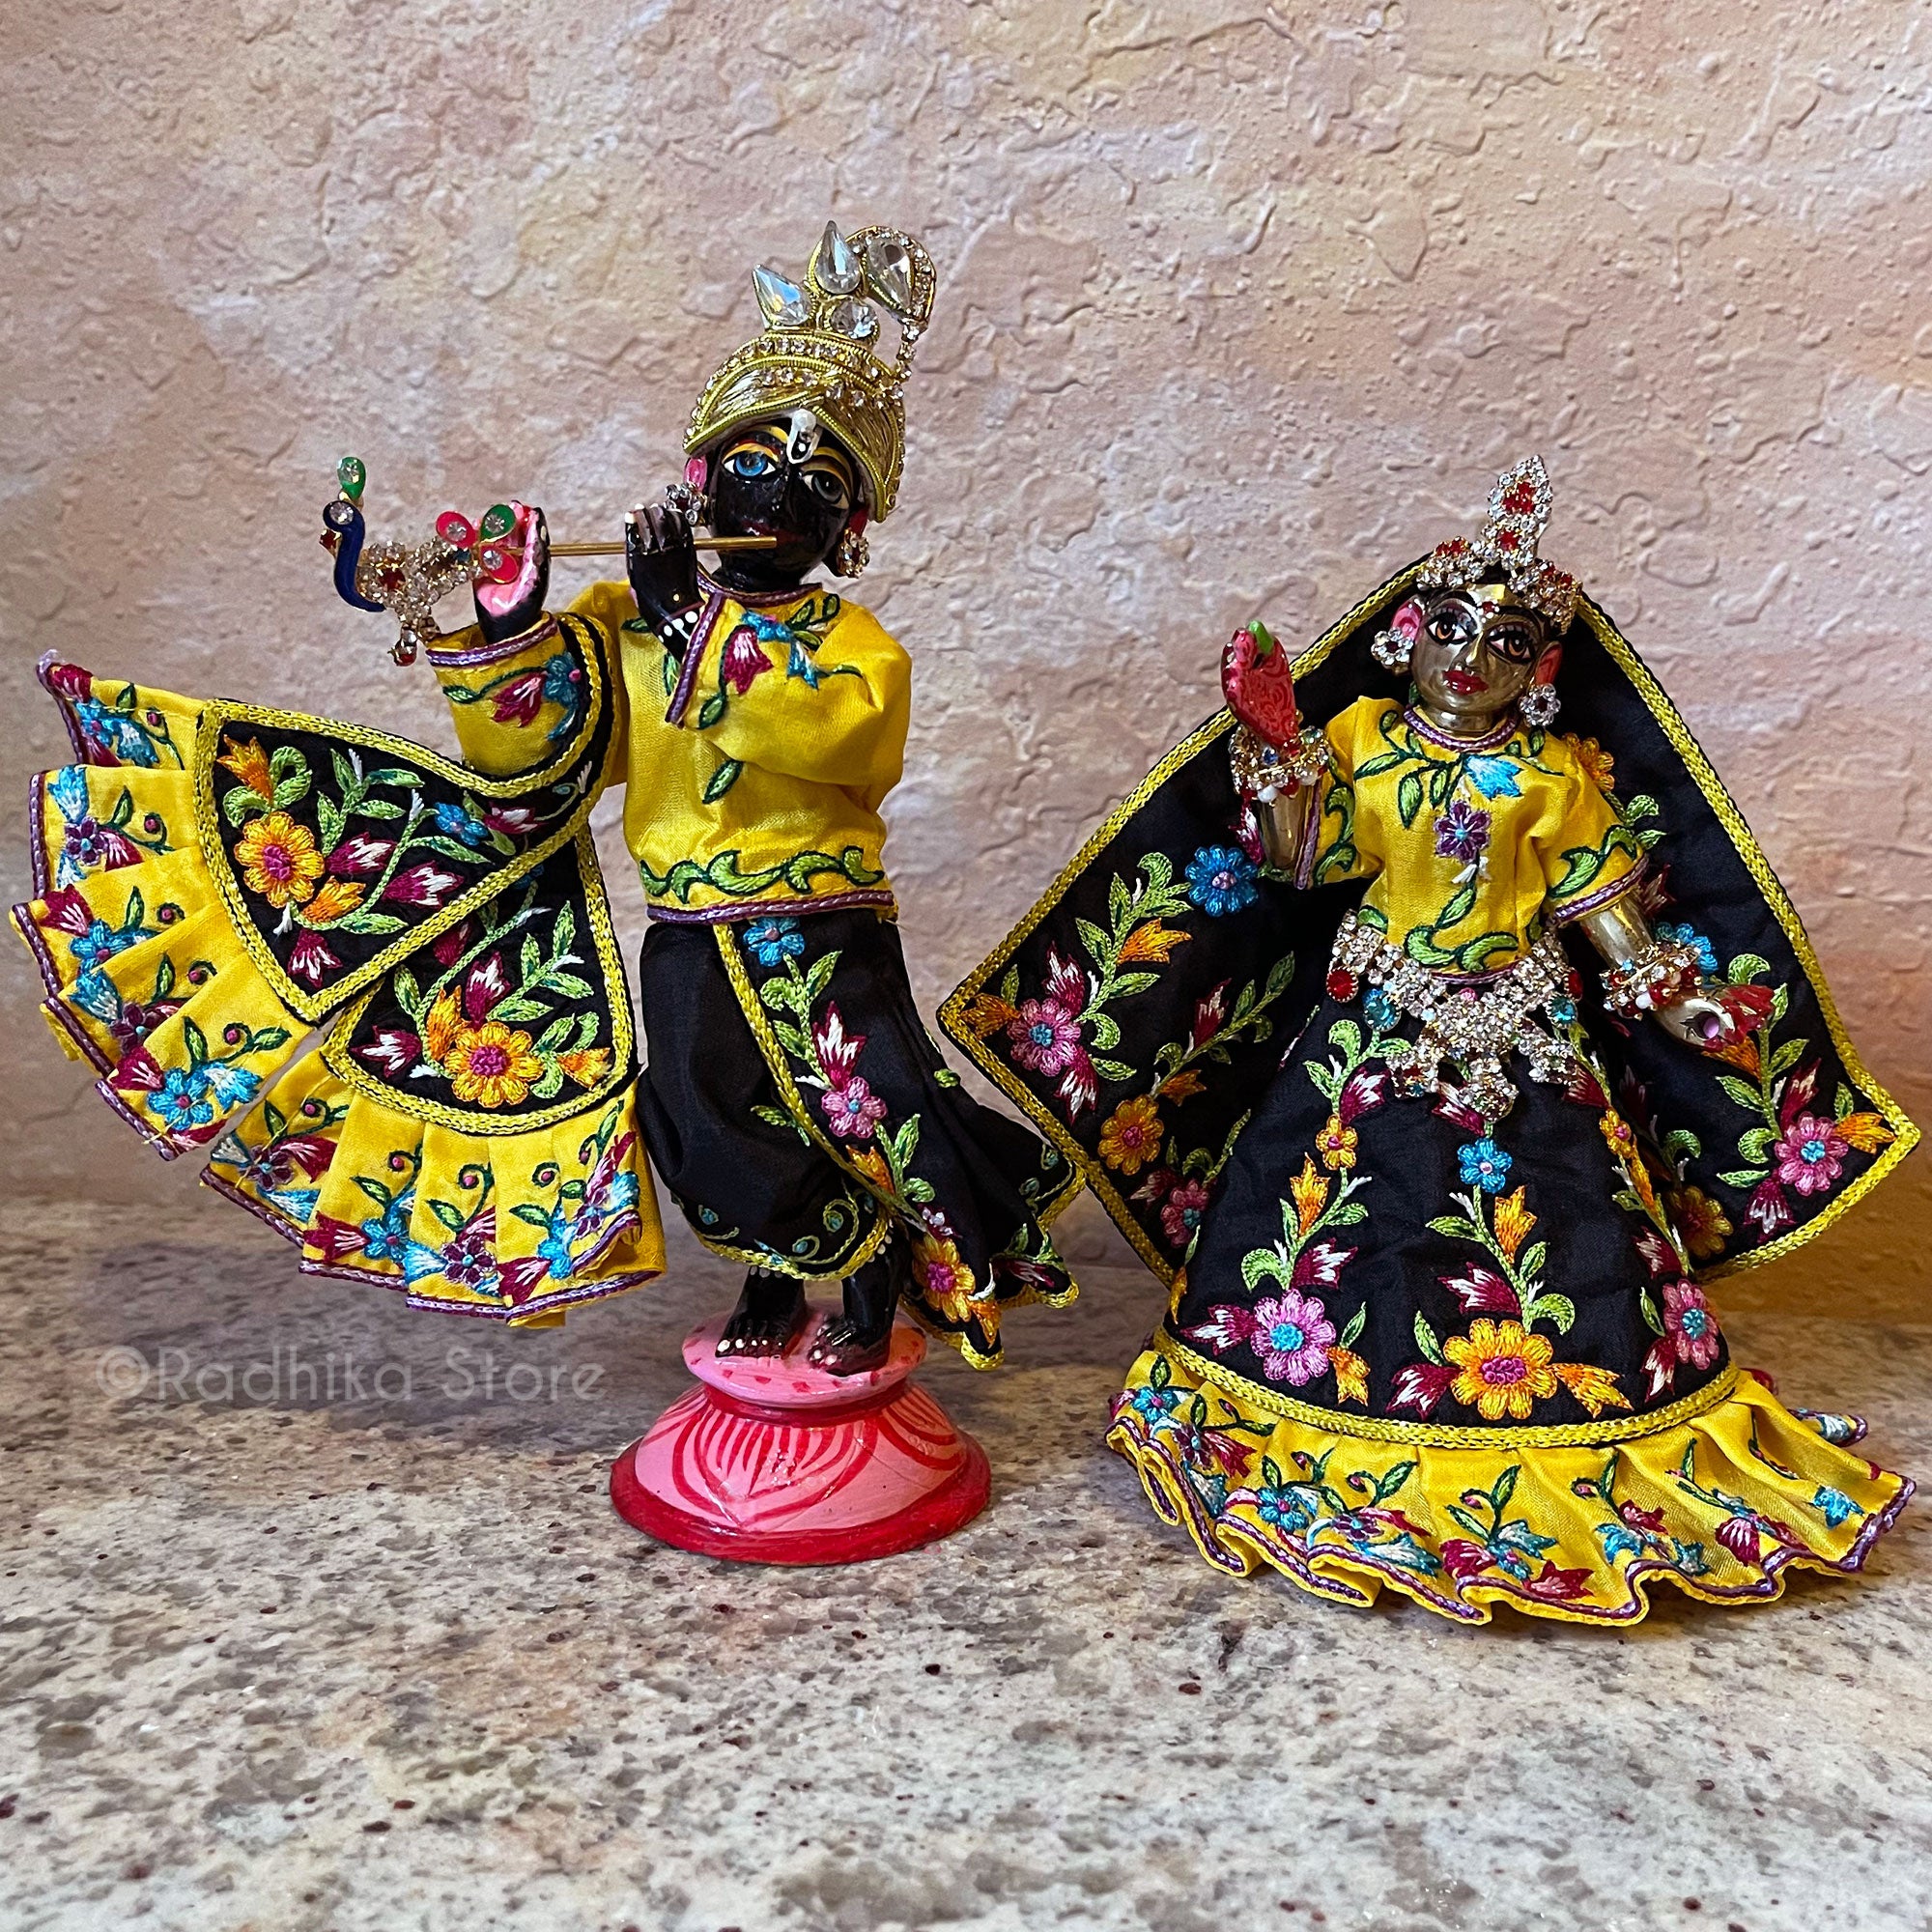 Moon Light Dancing- All Silk - Black and Marigold Yellow Multi Color - Radha Krishna Deity Outfit